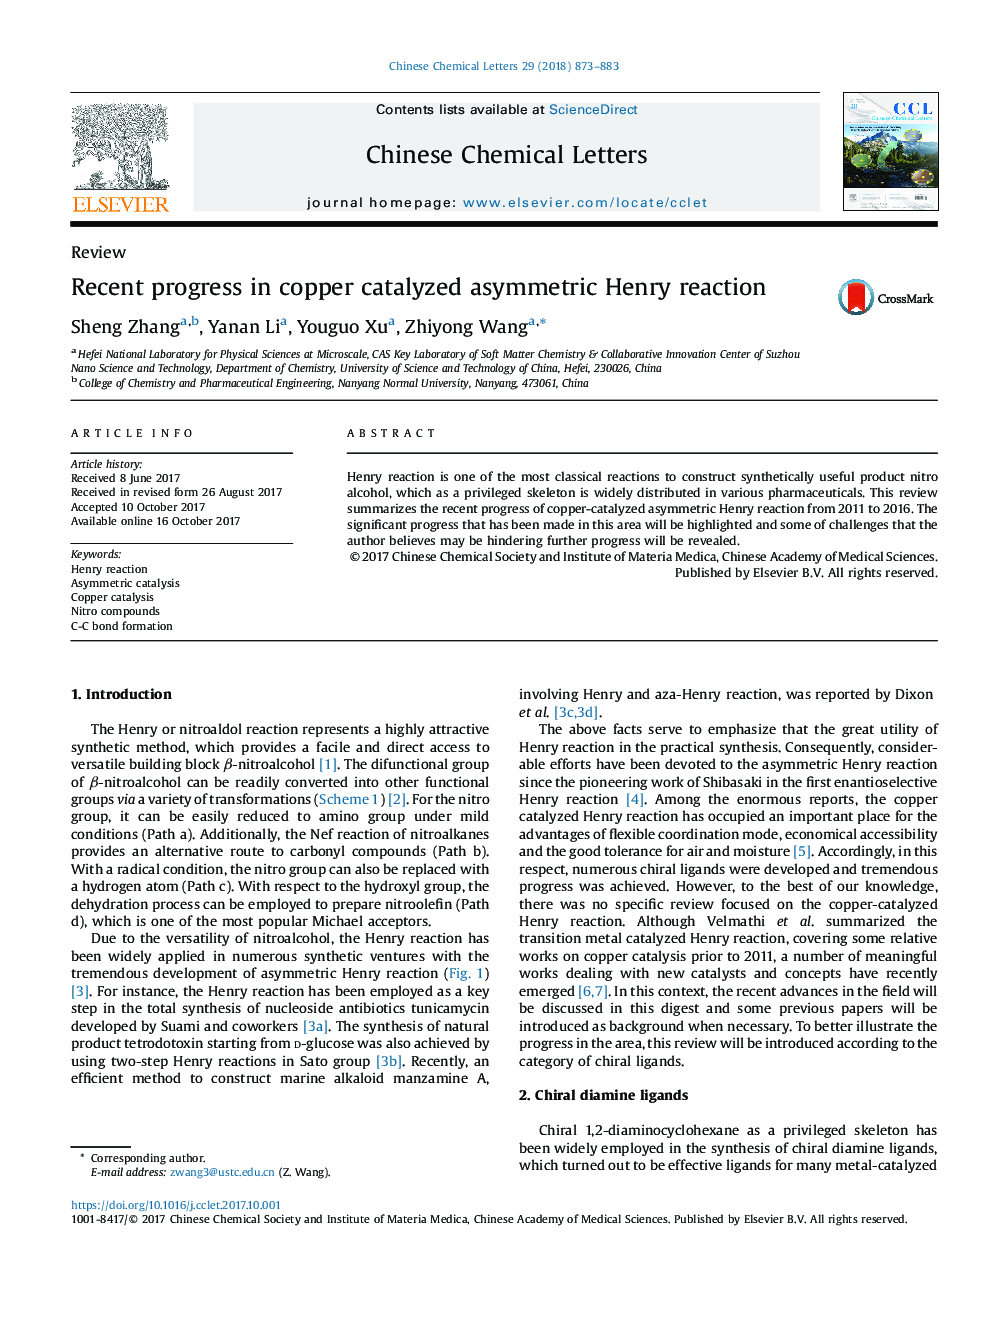 Recent progress in copper catalyzed asymmetric Henry reaction